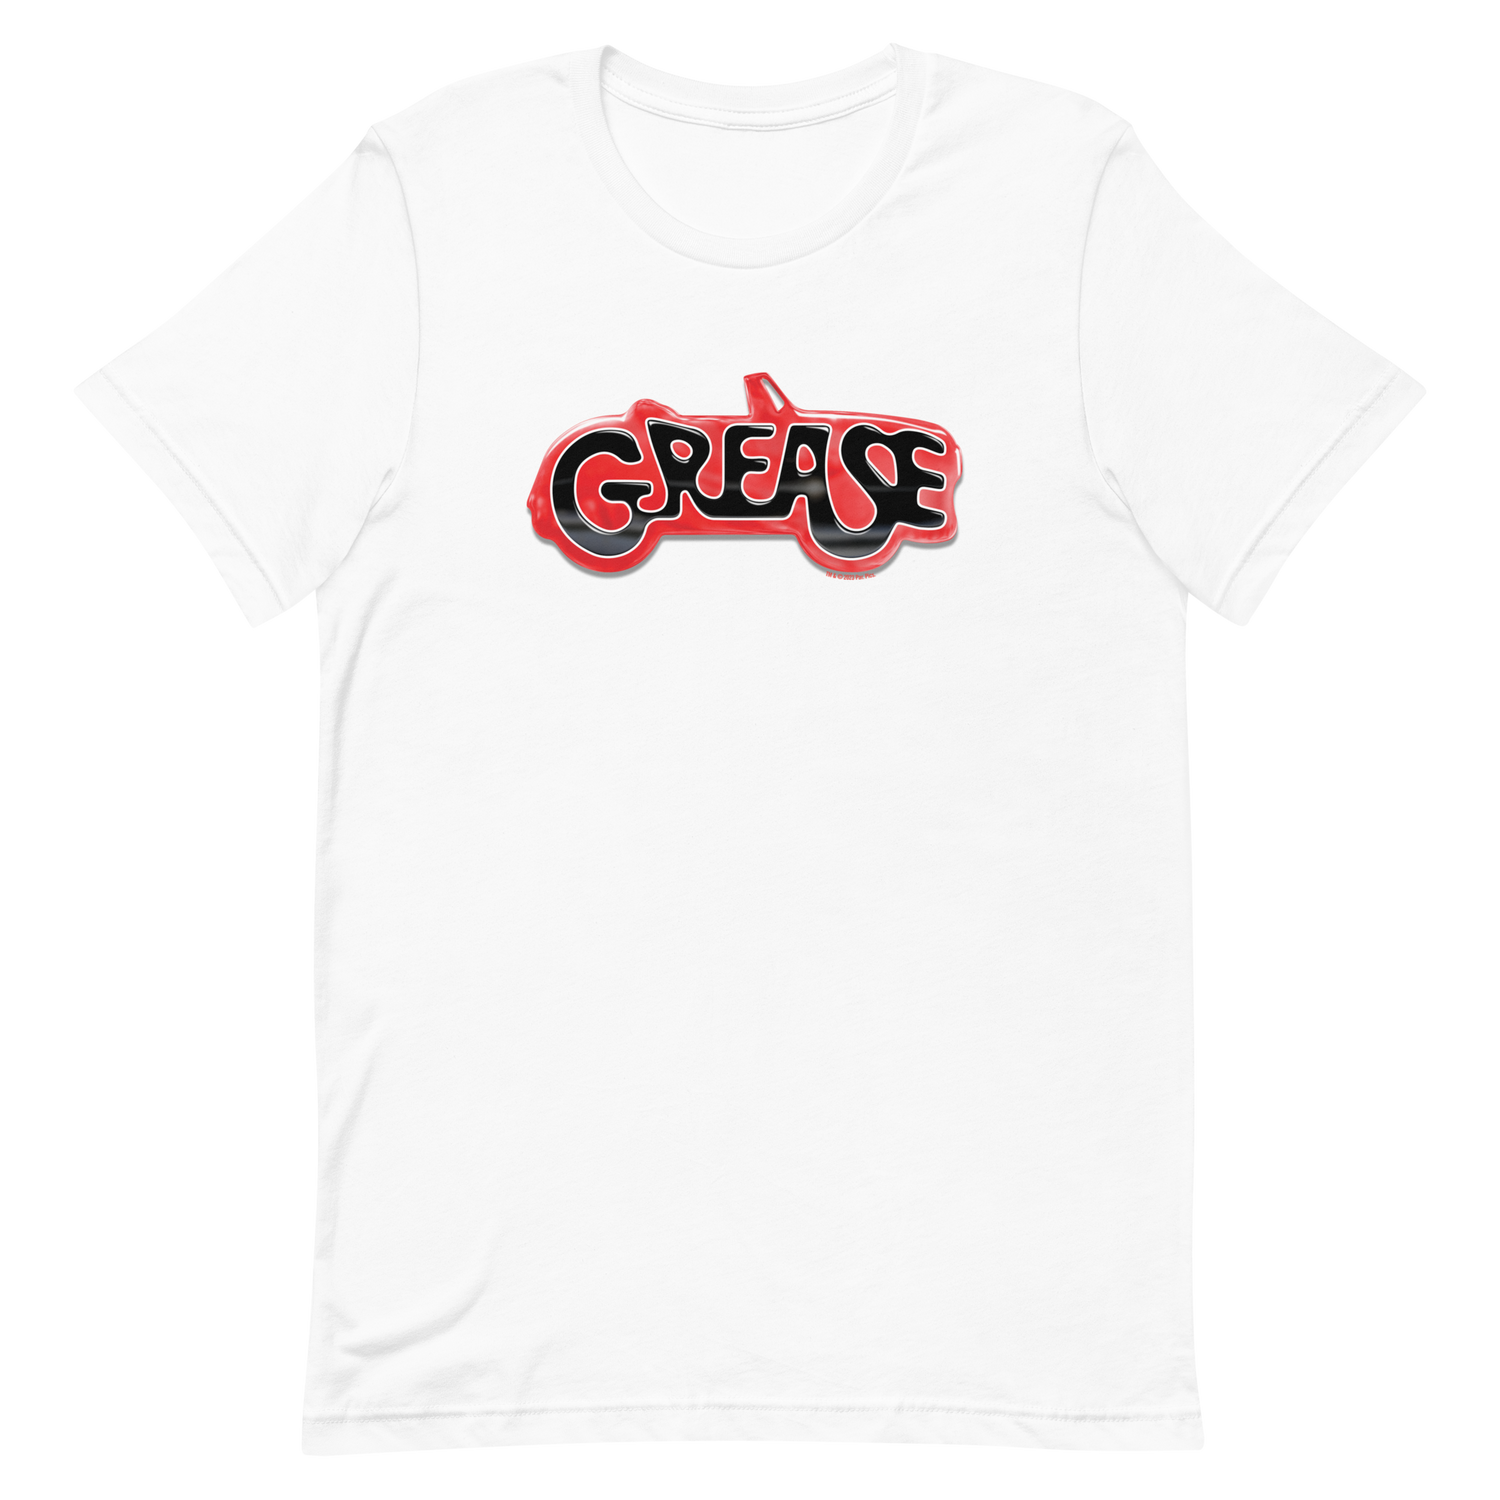 Grease Greased Lightning Logo Adult Shop Paramount – T-Shirt Sleeve Short